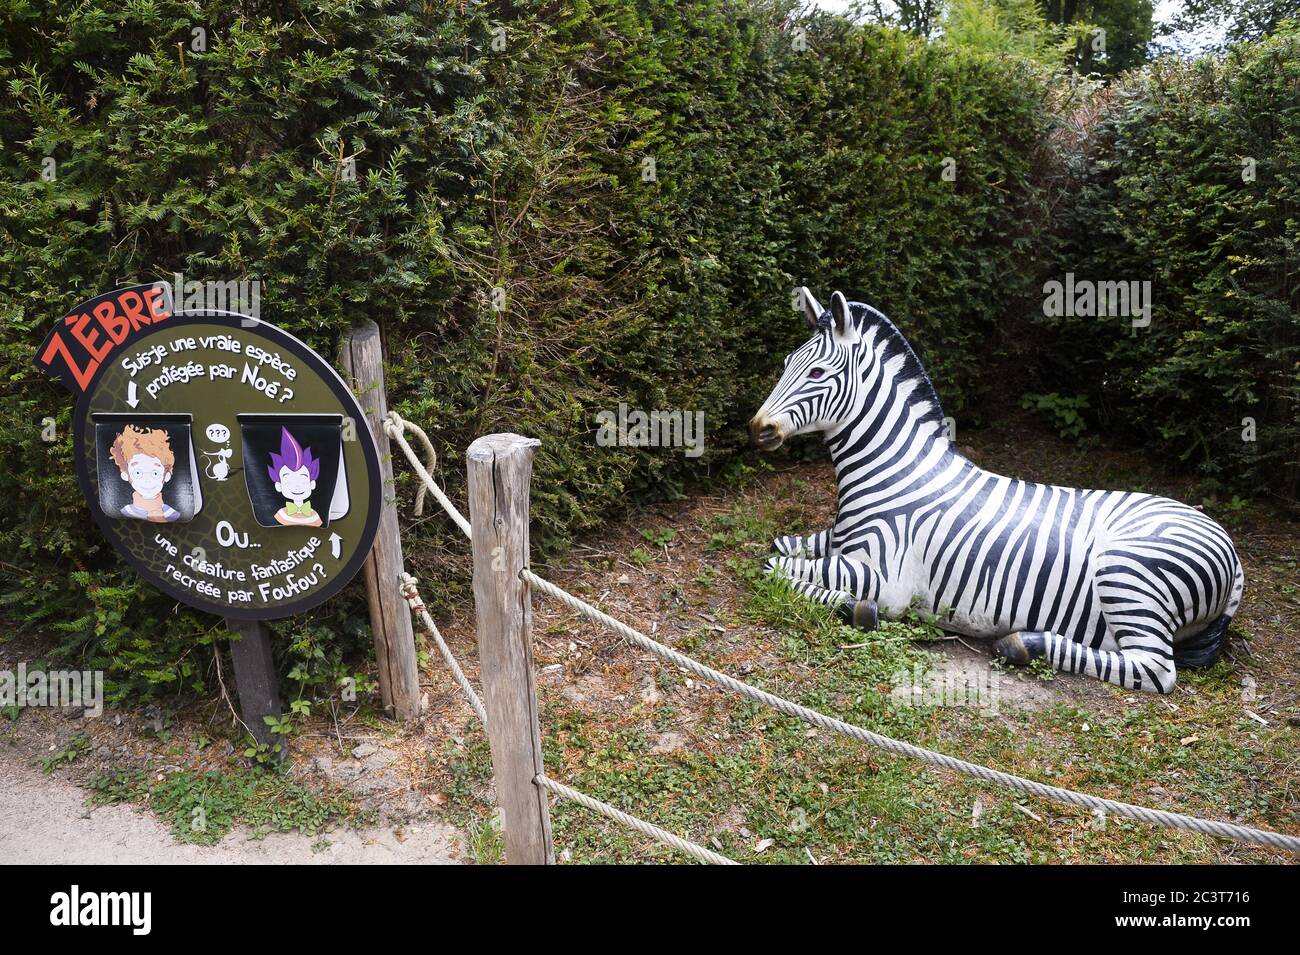 Thoiry Animals Zoo Park - Yvelines - France Stock Photo